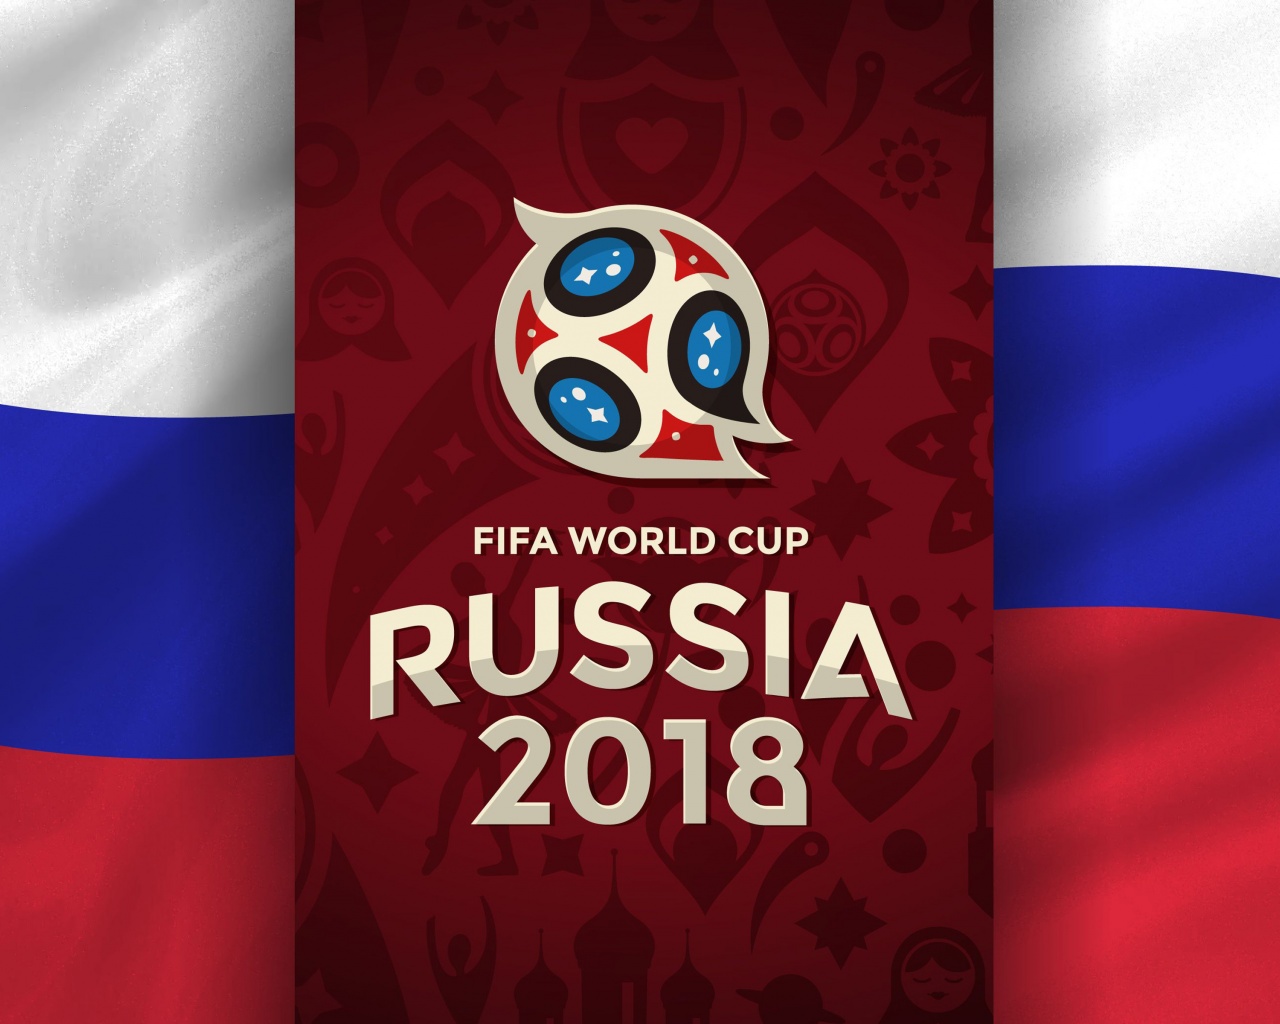 Fifa World Cup 2018 Russia